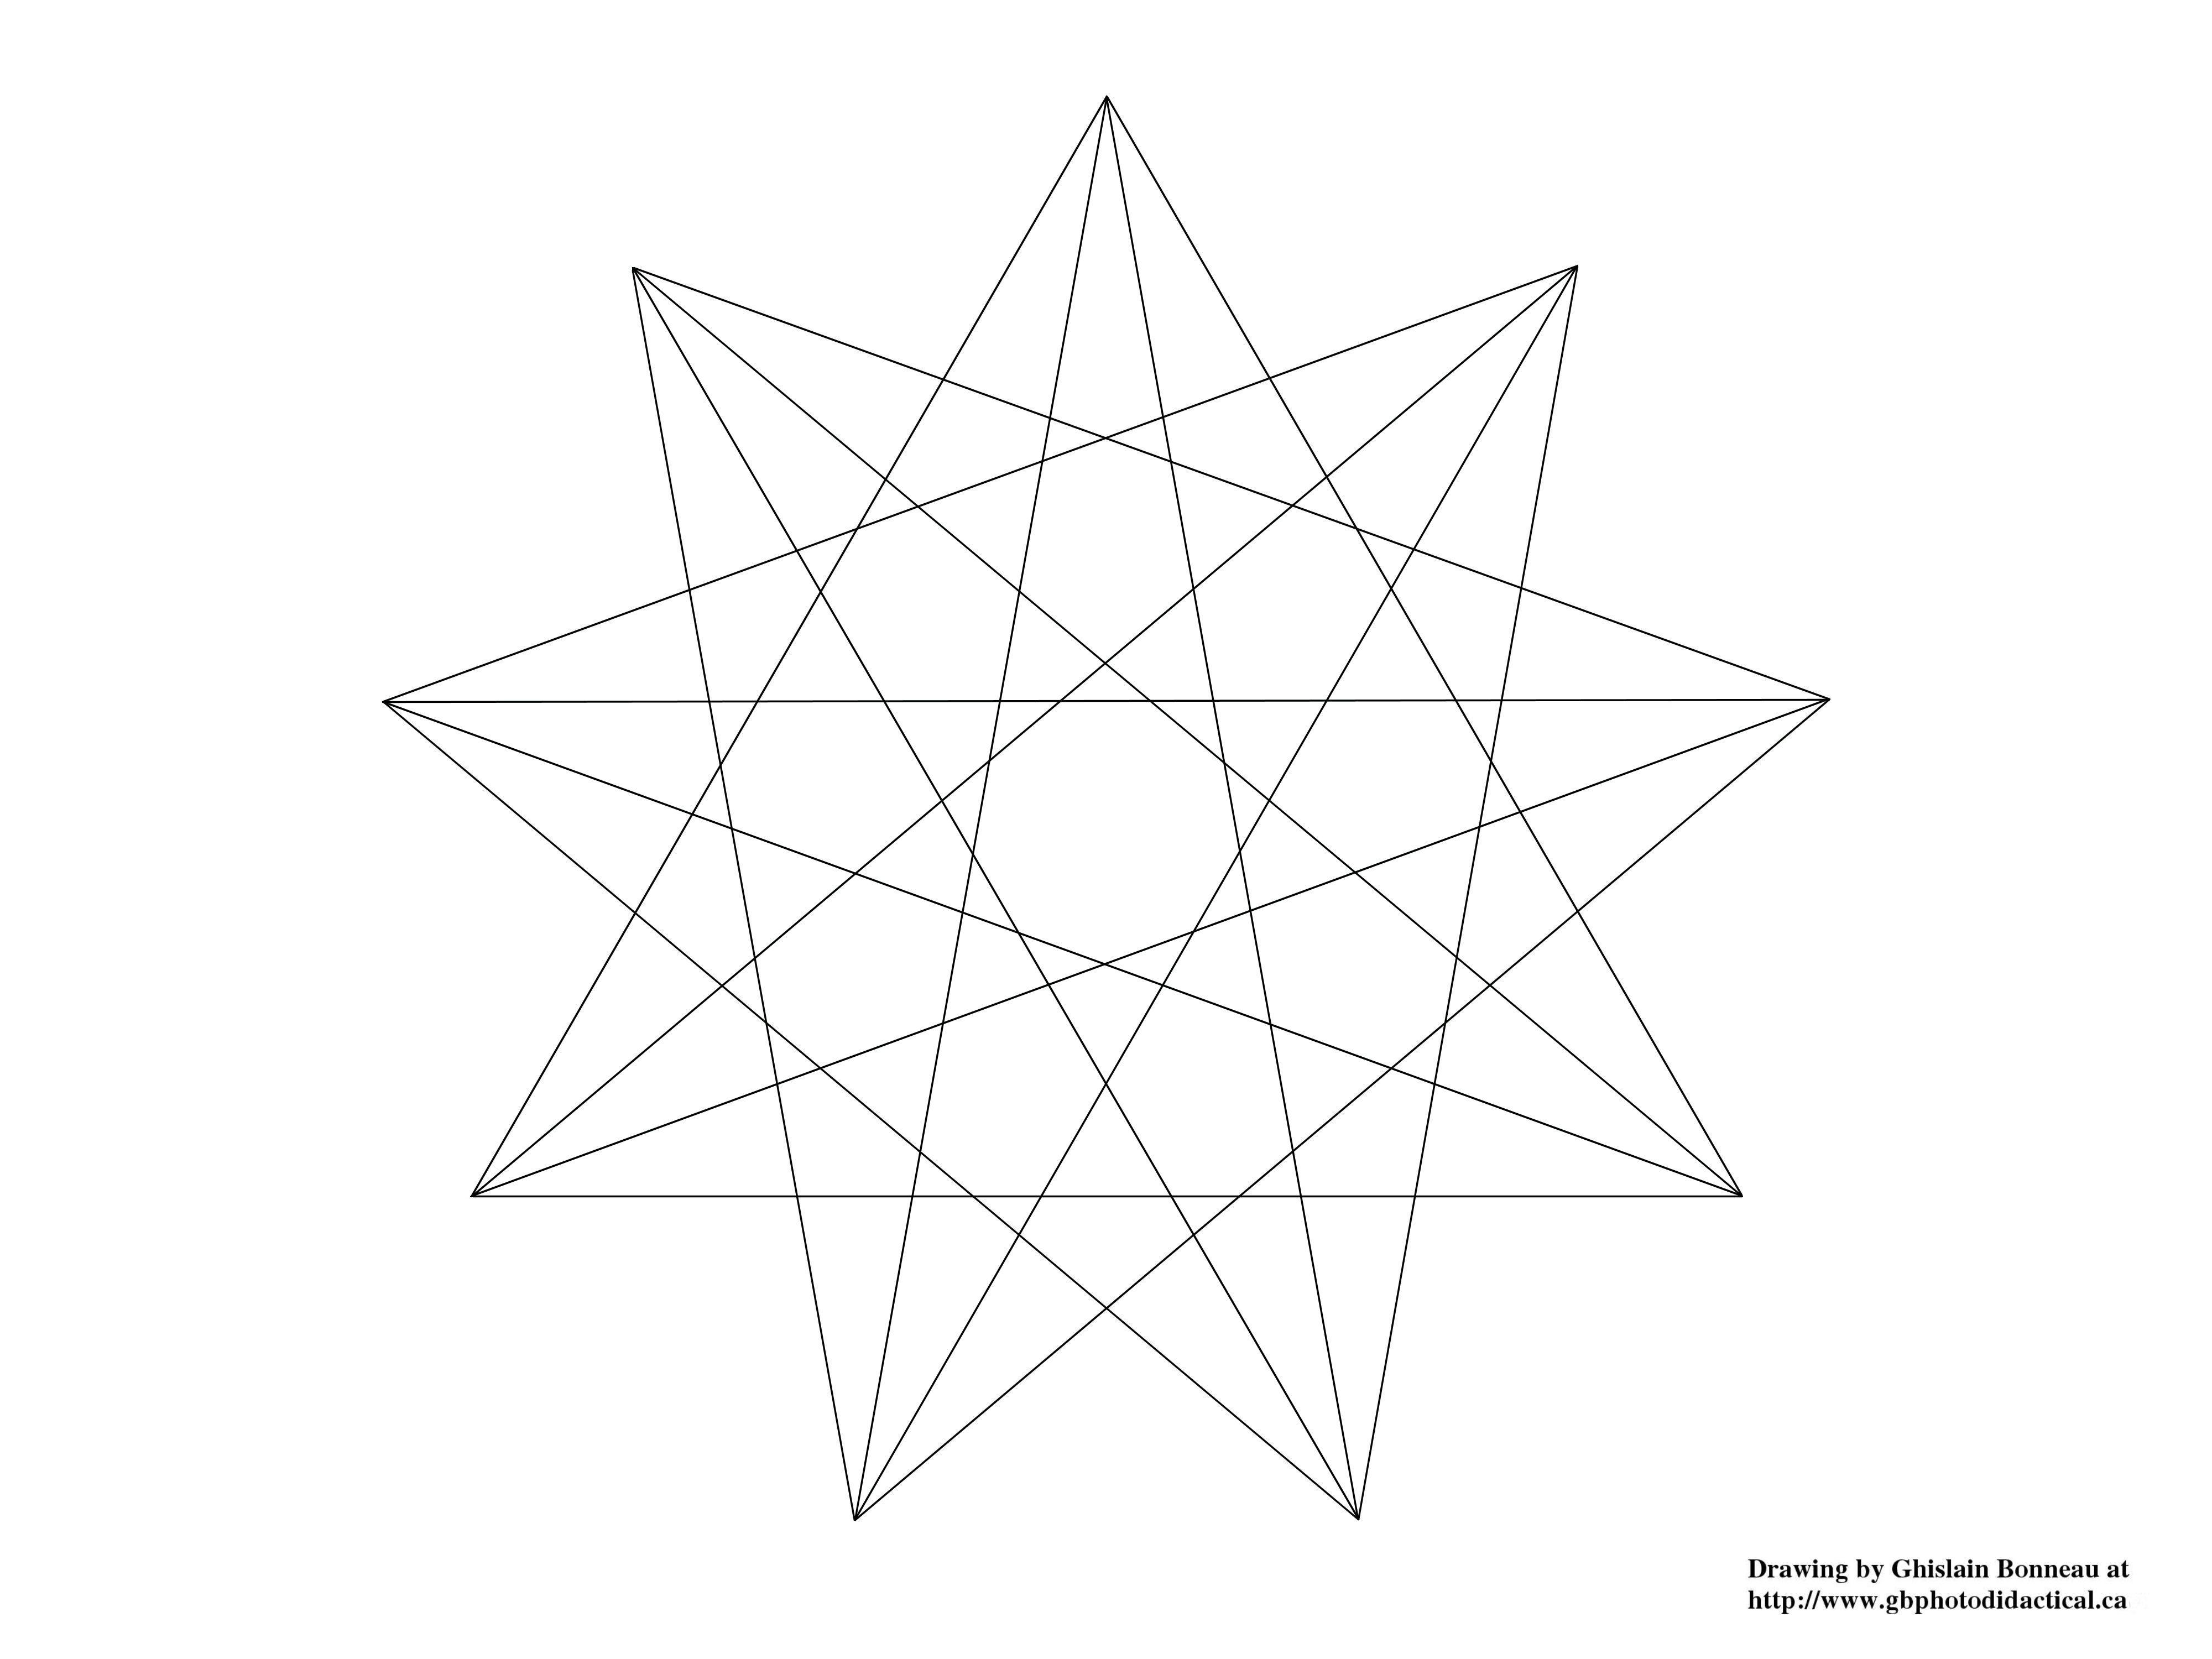 Nine Pointed Star Mandalas Safe Search. Mandalas 9 Sided